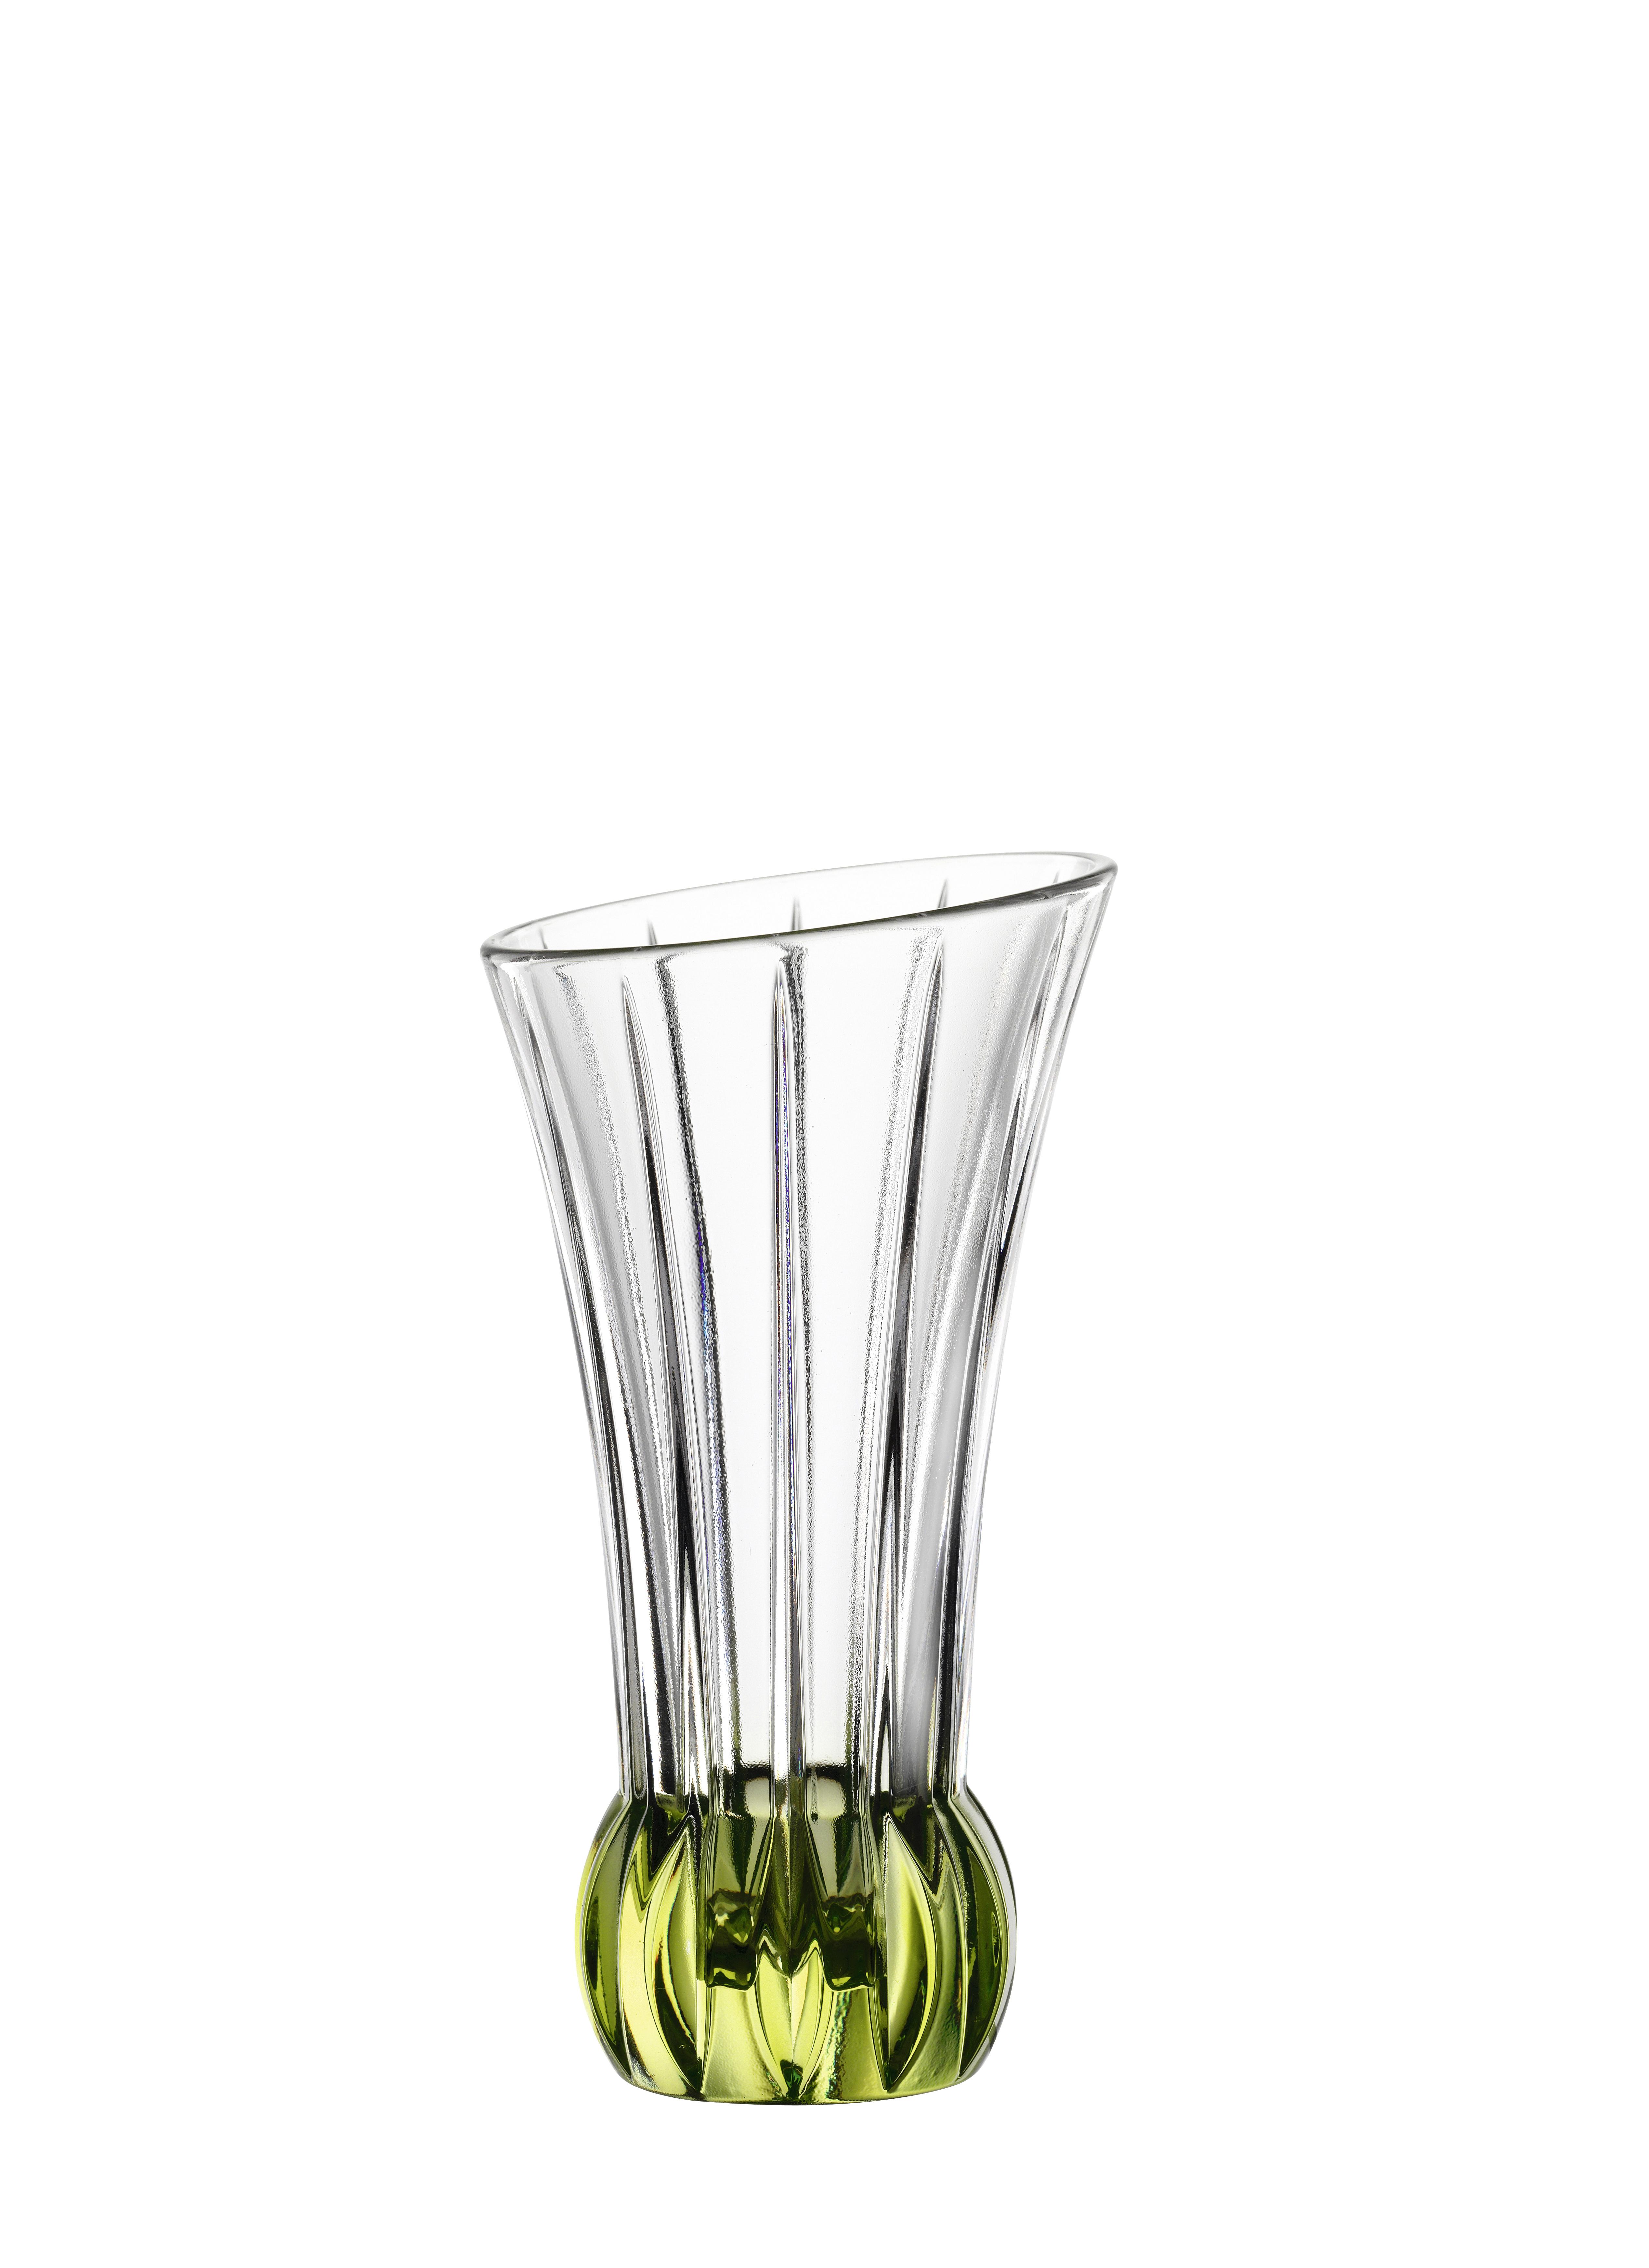 Vase Spring aus Kristallglas, 2-teilig - Klar, MODERN, Glas (7,2/7,2/13,6cm) - Nachtmann